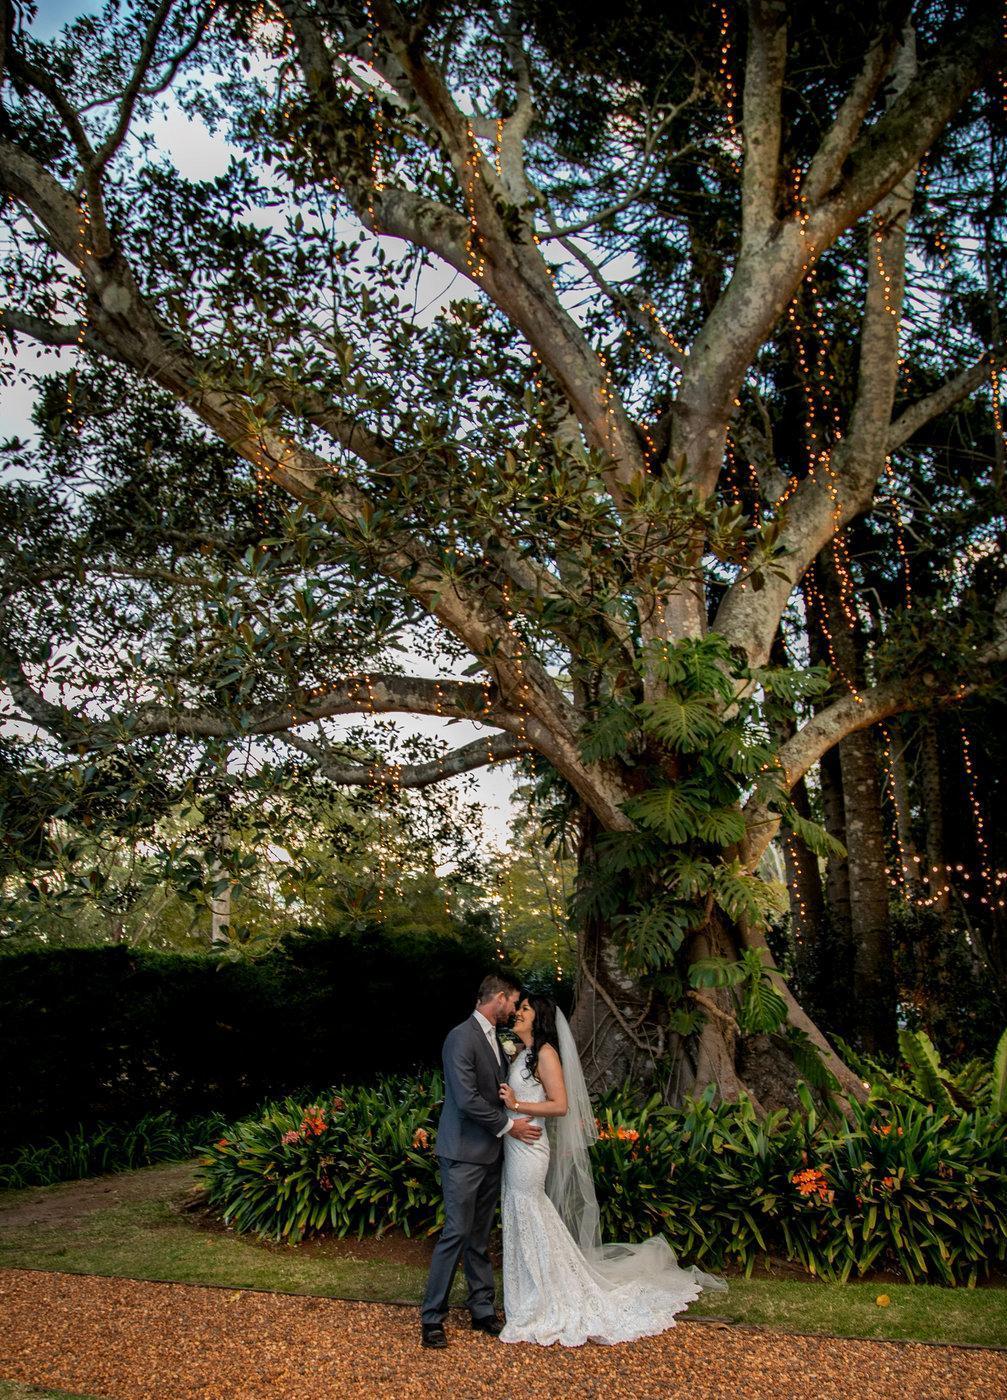 Wedding Photography couple embracing under tree